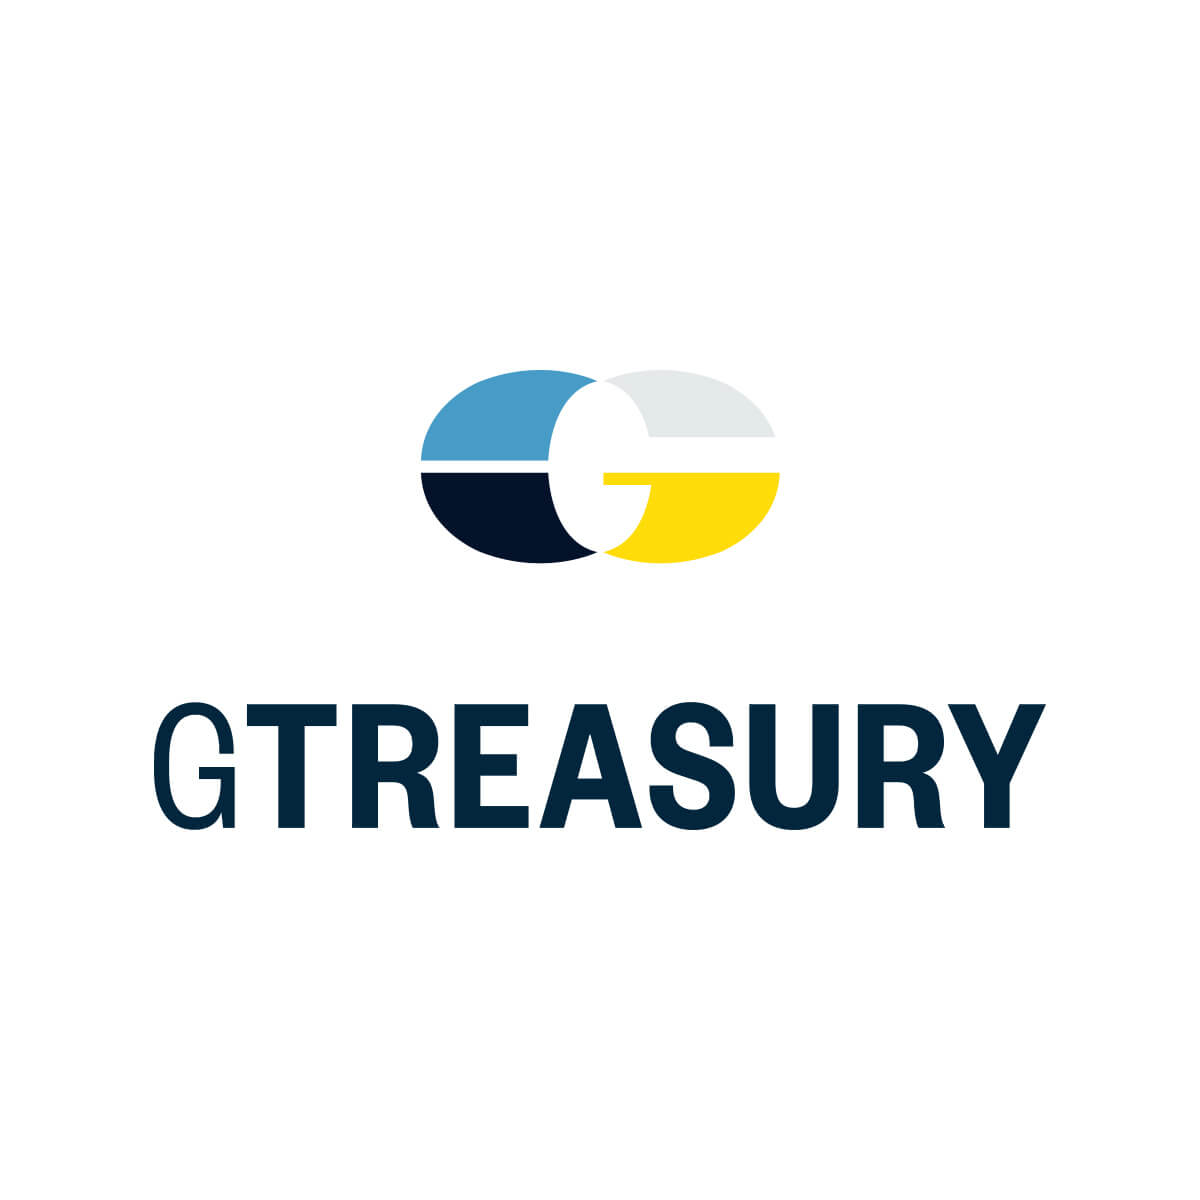 https://grafik.agency/wp-content/uploads/gtreasury-logo@2x.jpg